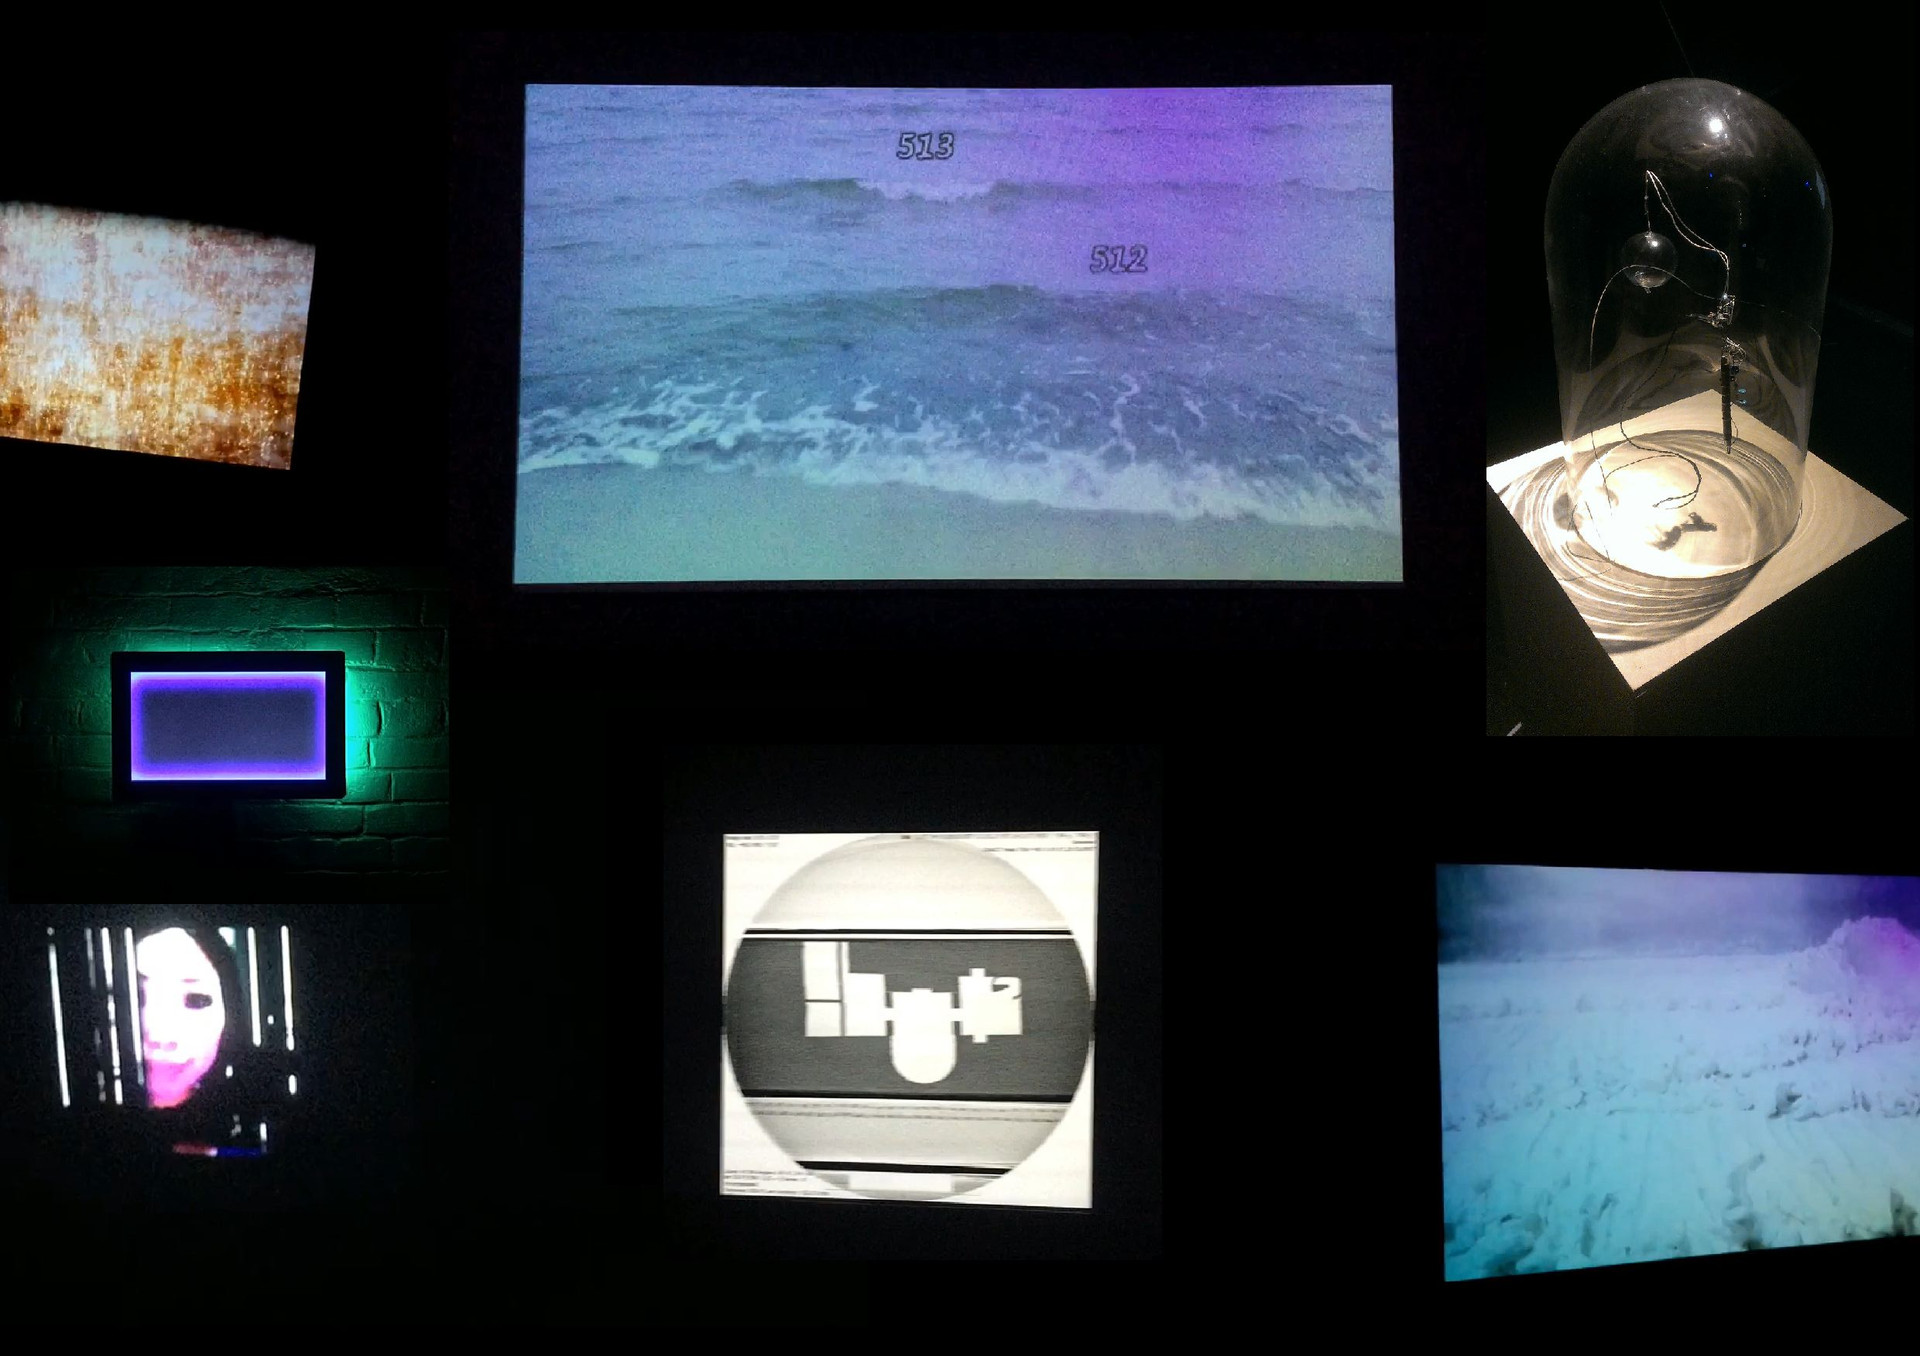 Такаси Макино «Cinéma Concret» (2015) (слева вверху); Exonemo «201703EOF» (2017) (центр, слева); Хараюки Иси «… ……….,» (2011) (слева, низ); Маи Ямасита и&nbsp;Наото Кобаяси «1000 waves» (2007) (центр, вверху); Shimura Bros «X-Ray Film of Olafur Eliasson“s Artists”s Book Your House: Front/Top/Side» (2015) (центр, снизу); Соитиро Михара «Bell» (2013) (cправо вверху); Рё Орикаса «Datum Point» (2015) (справо внизу); Courtesy: https://tinyurl.com/cwh6u4rk